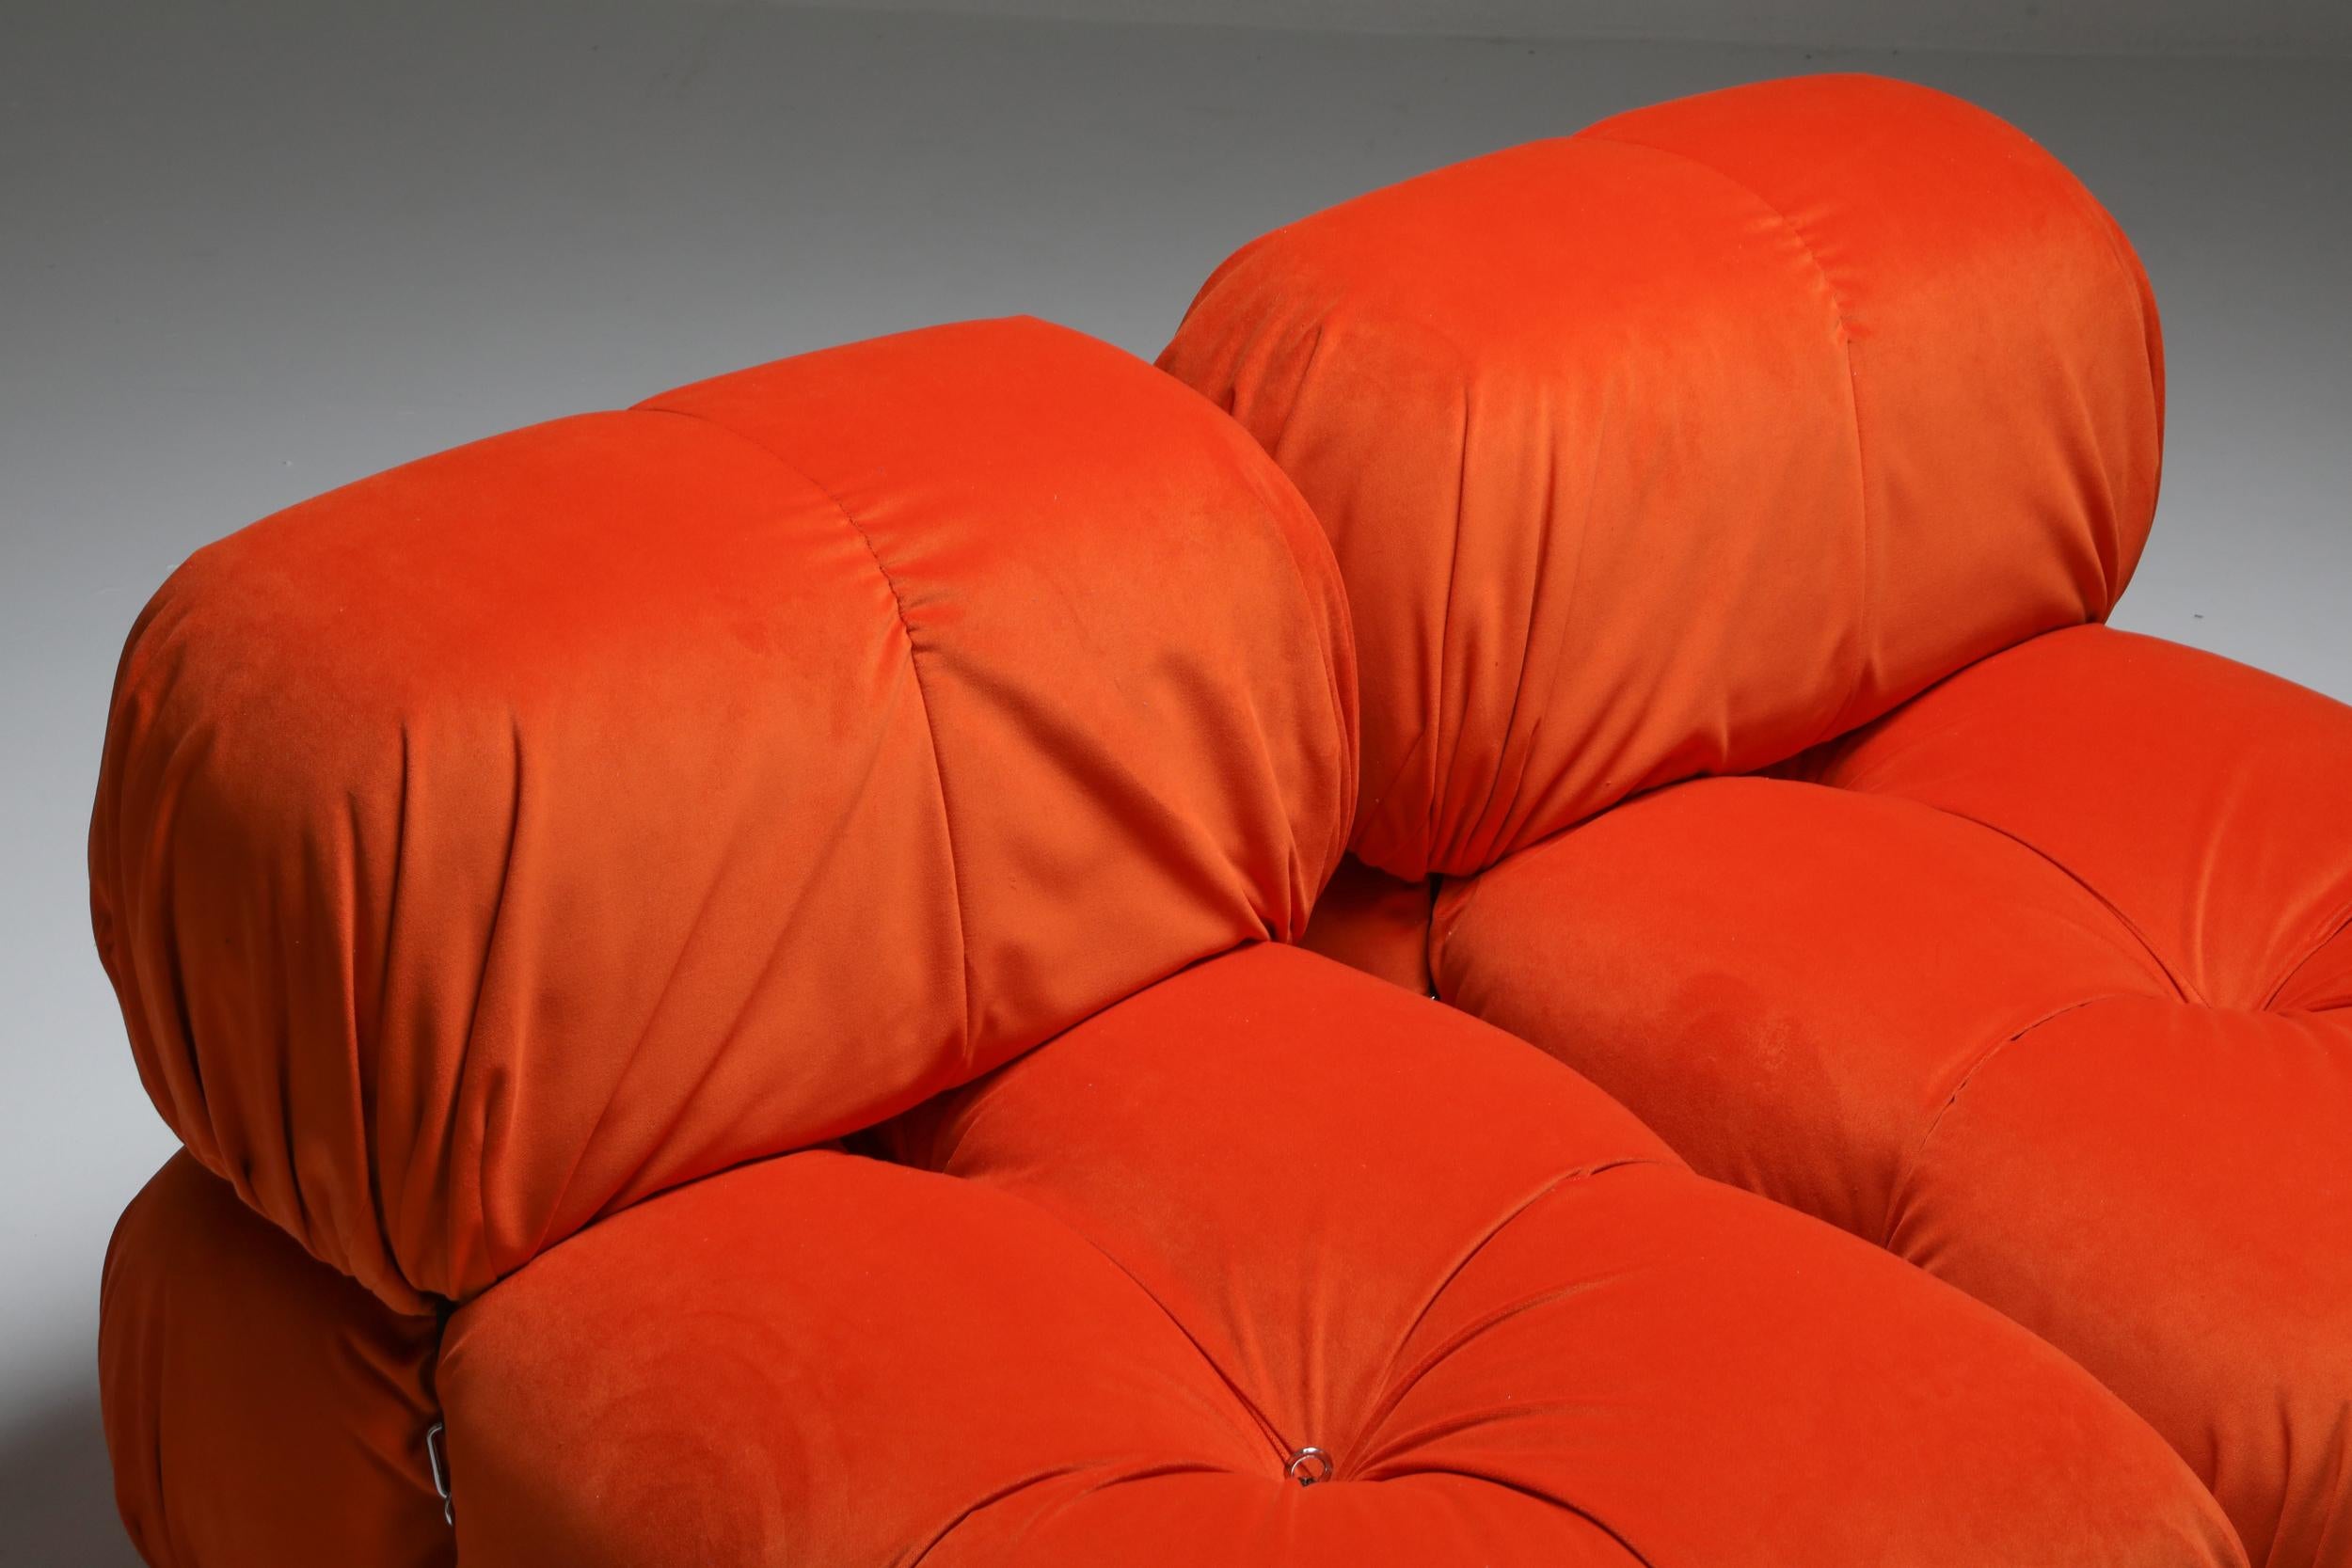 Italian Camaleonda Sectional Sofa in Bright Orange